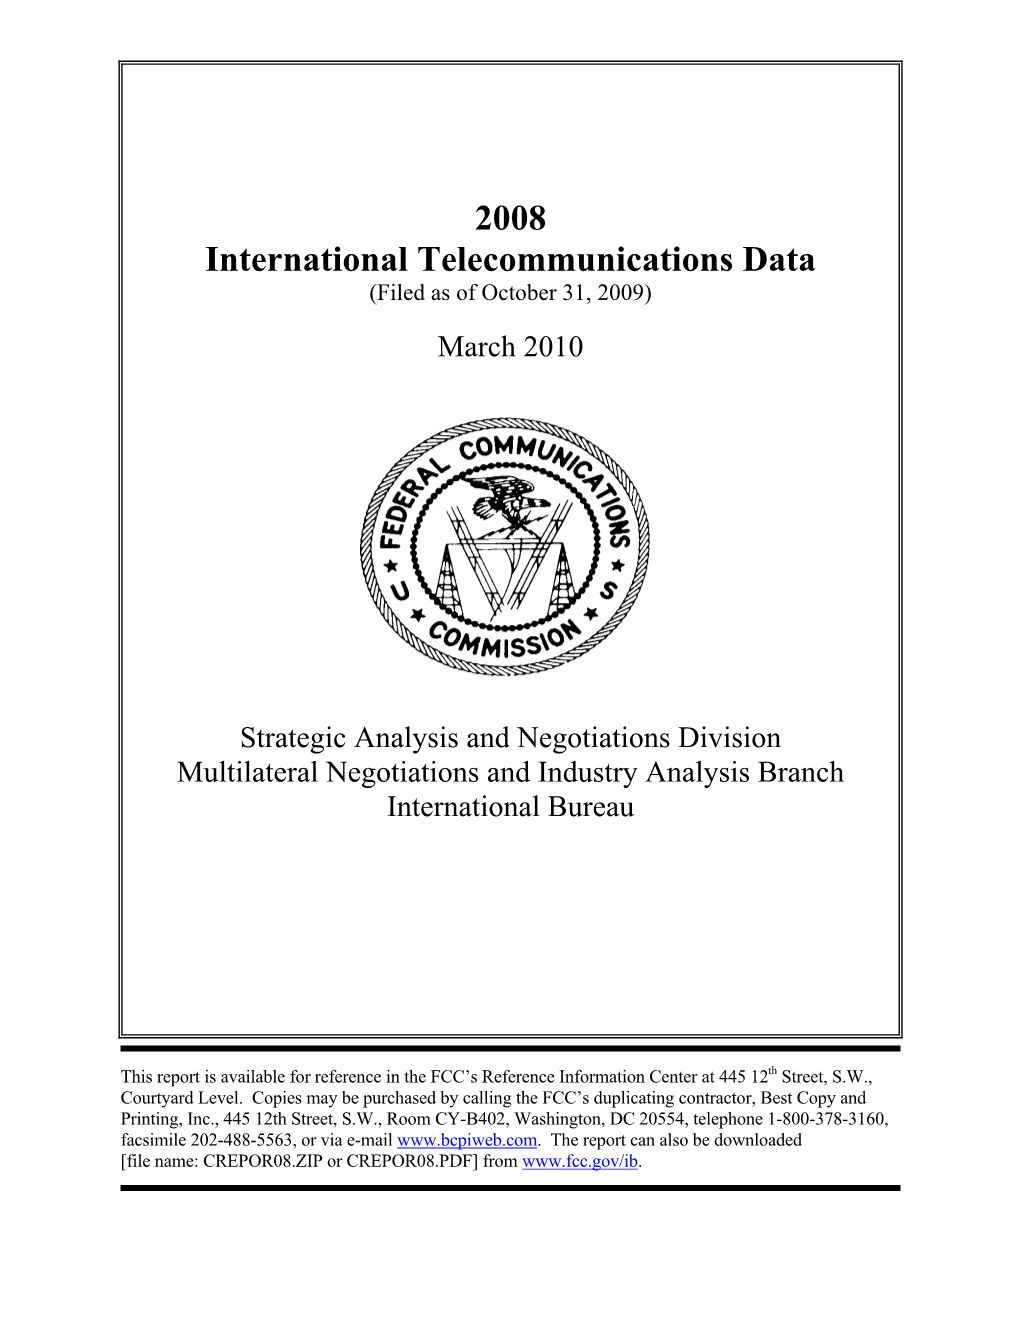 2008 International Telecommunications Data (Filed As of October 31, 2009)